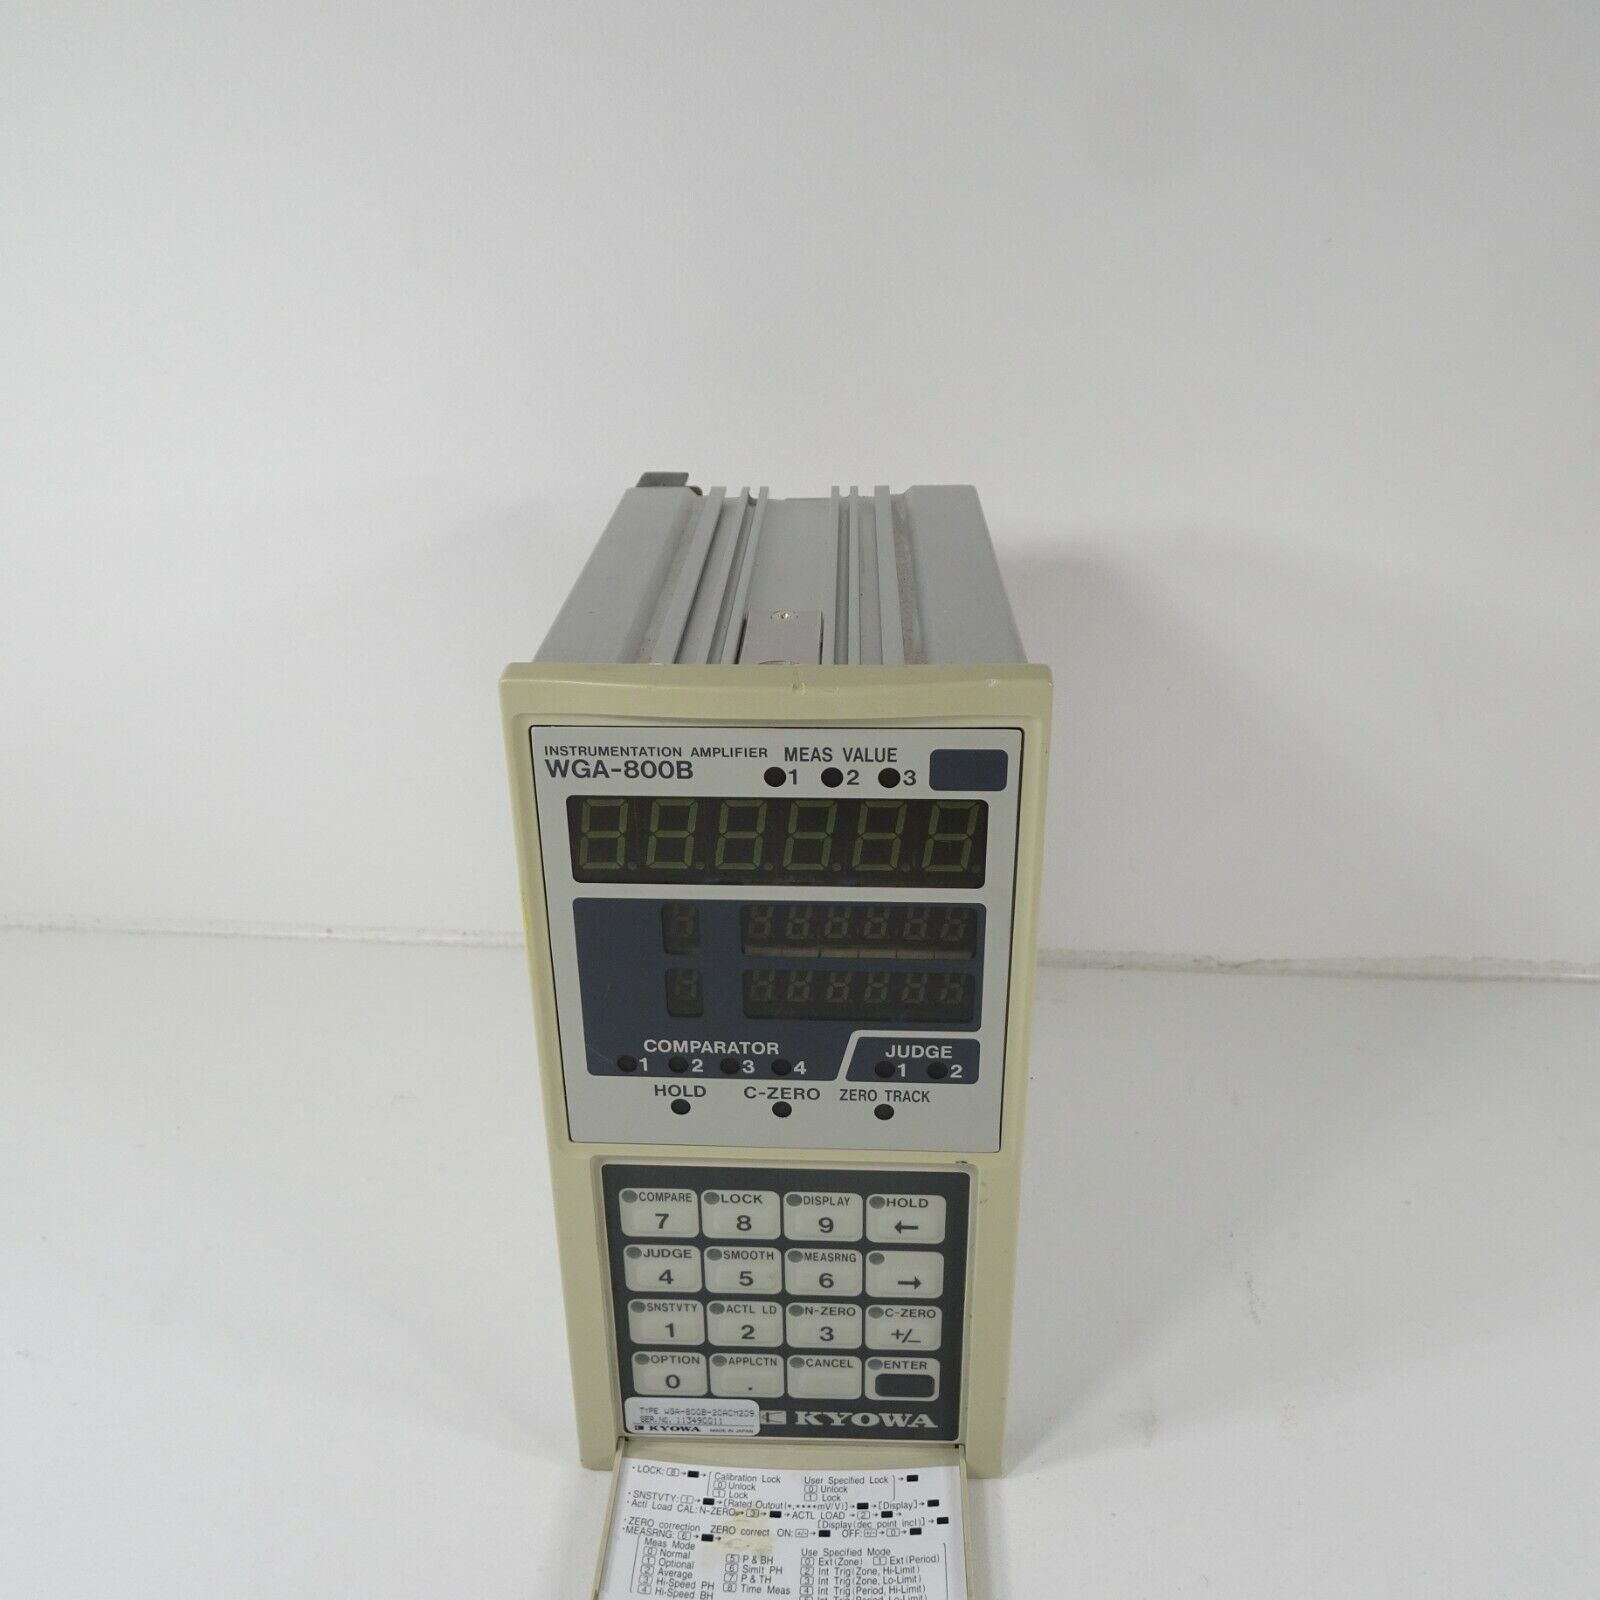 KYOWA WGA-800B Instruments Amplifier